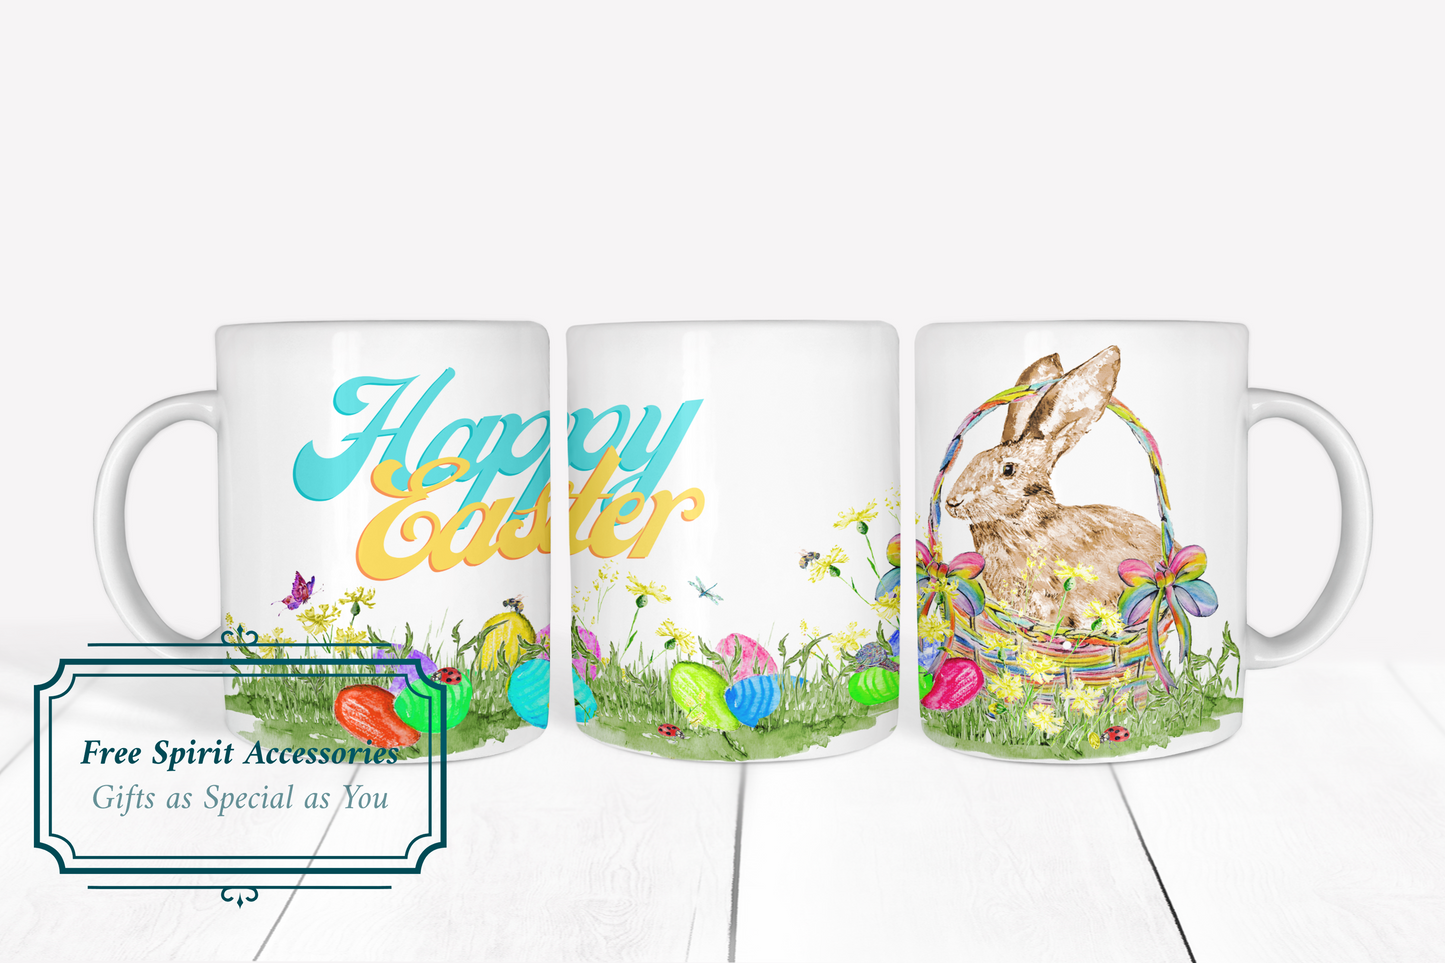  Easter Bunny Coffee Mug by Free Spirit Accessories sold by Free Spirit Accessories